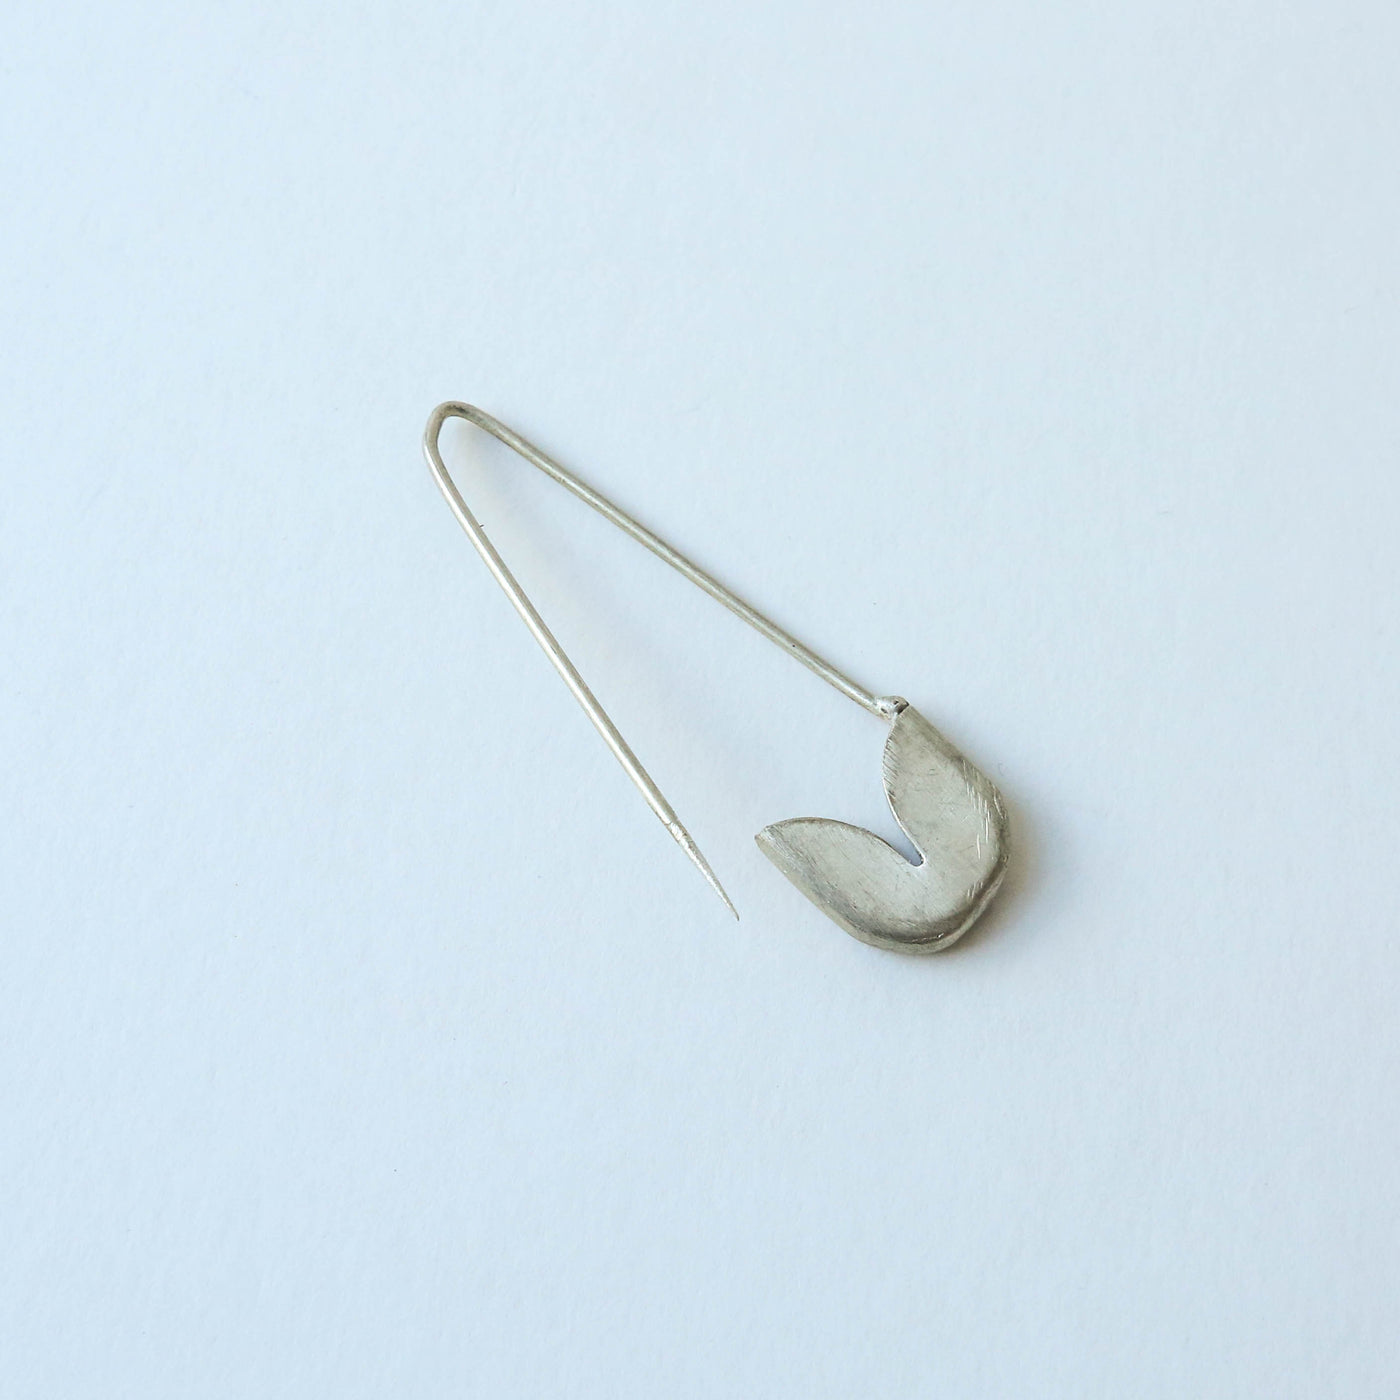 7.5cm Silver Scarf Pin